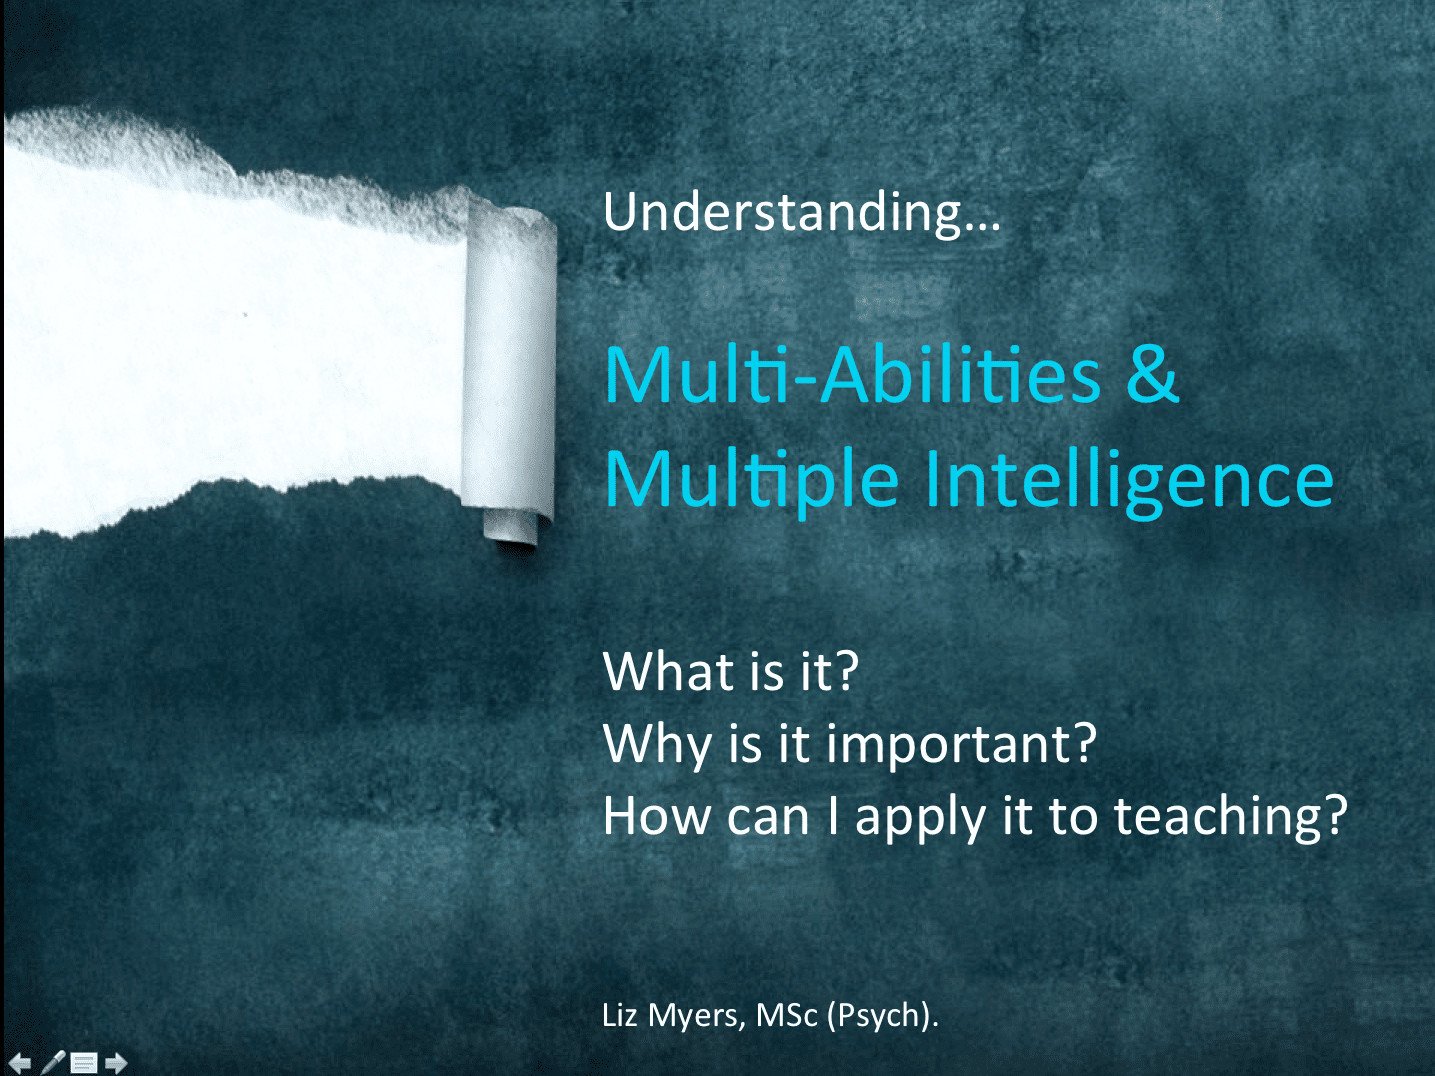 Multi-Abilities and Multiple Intelligence